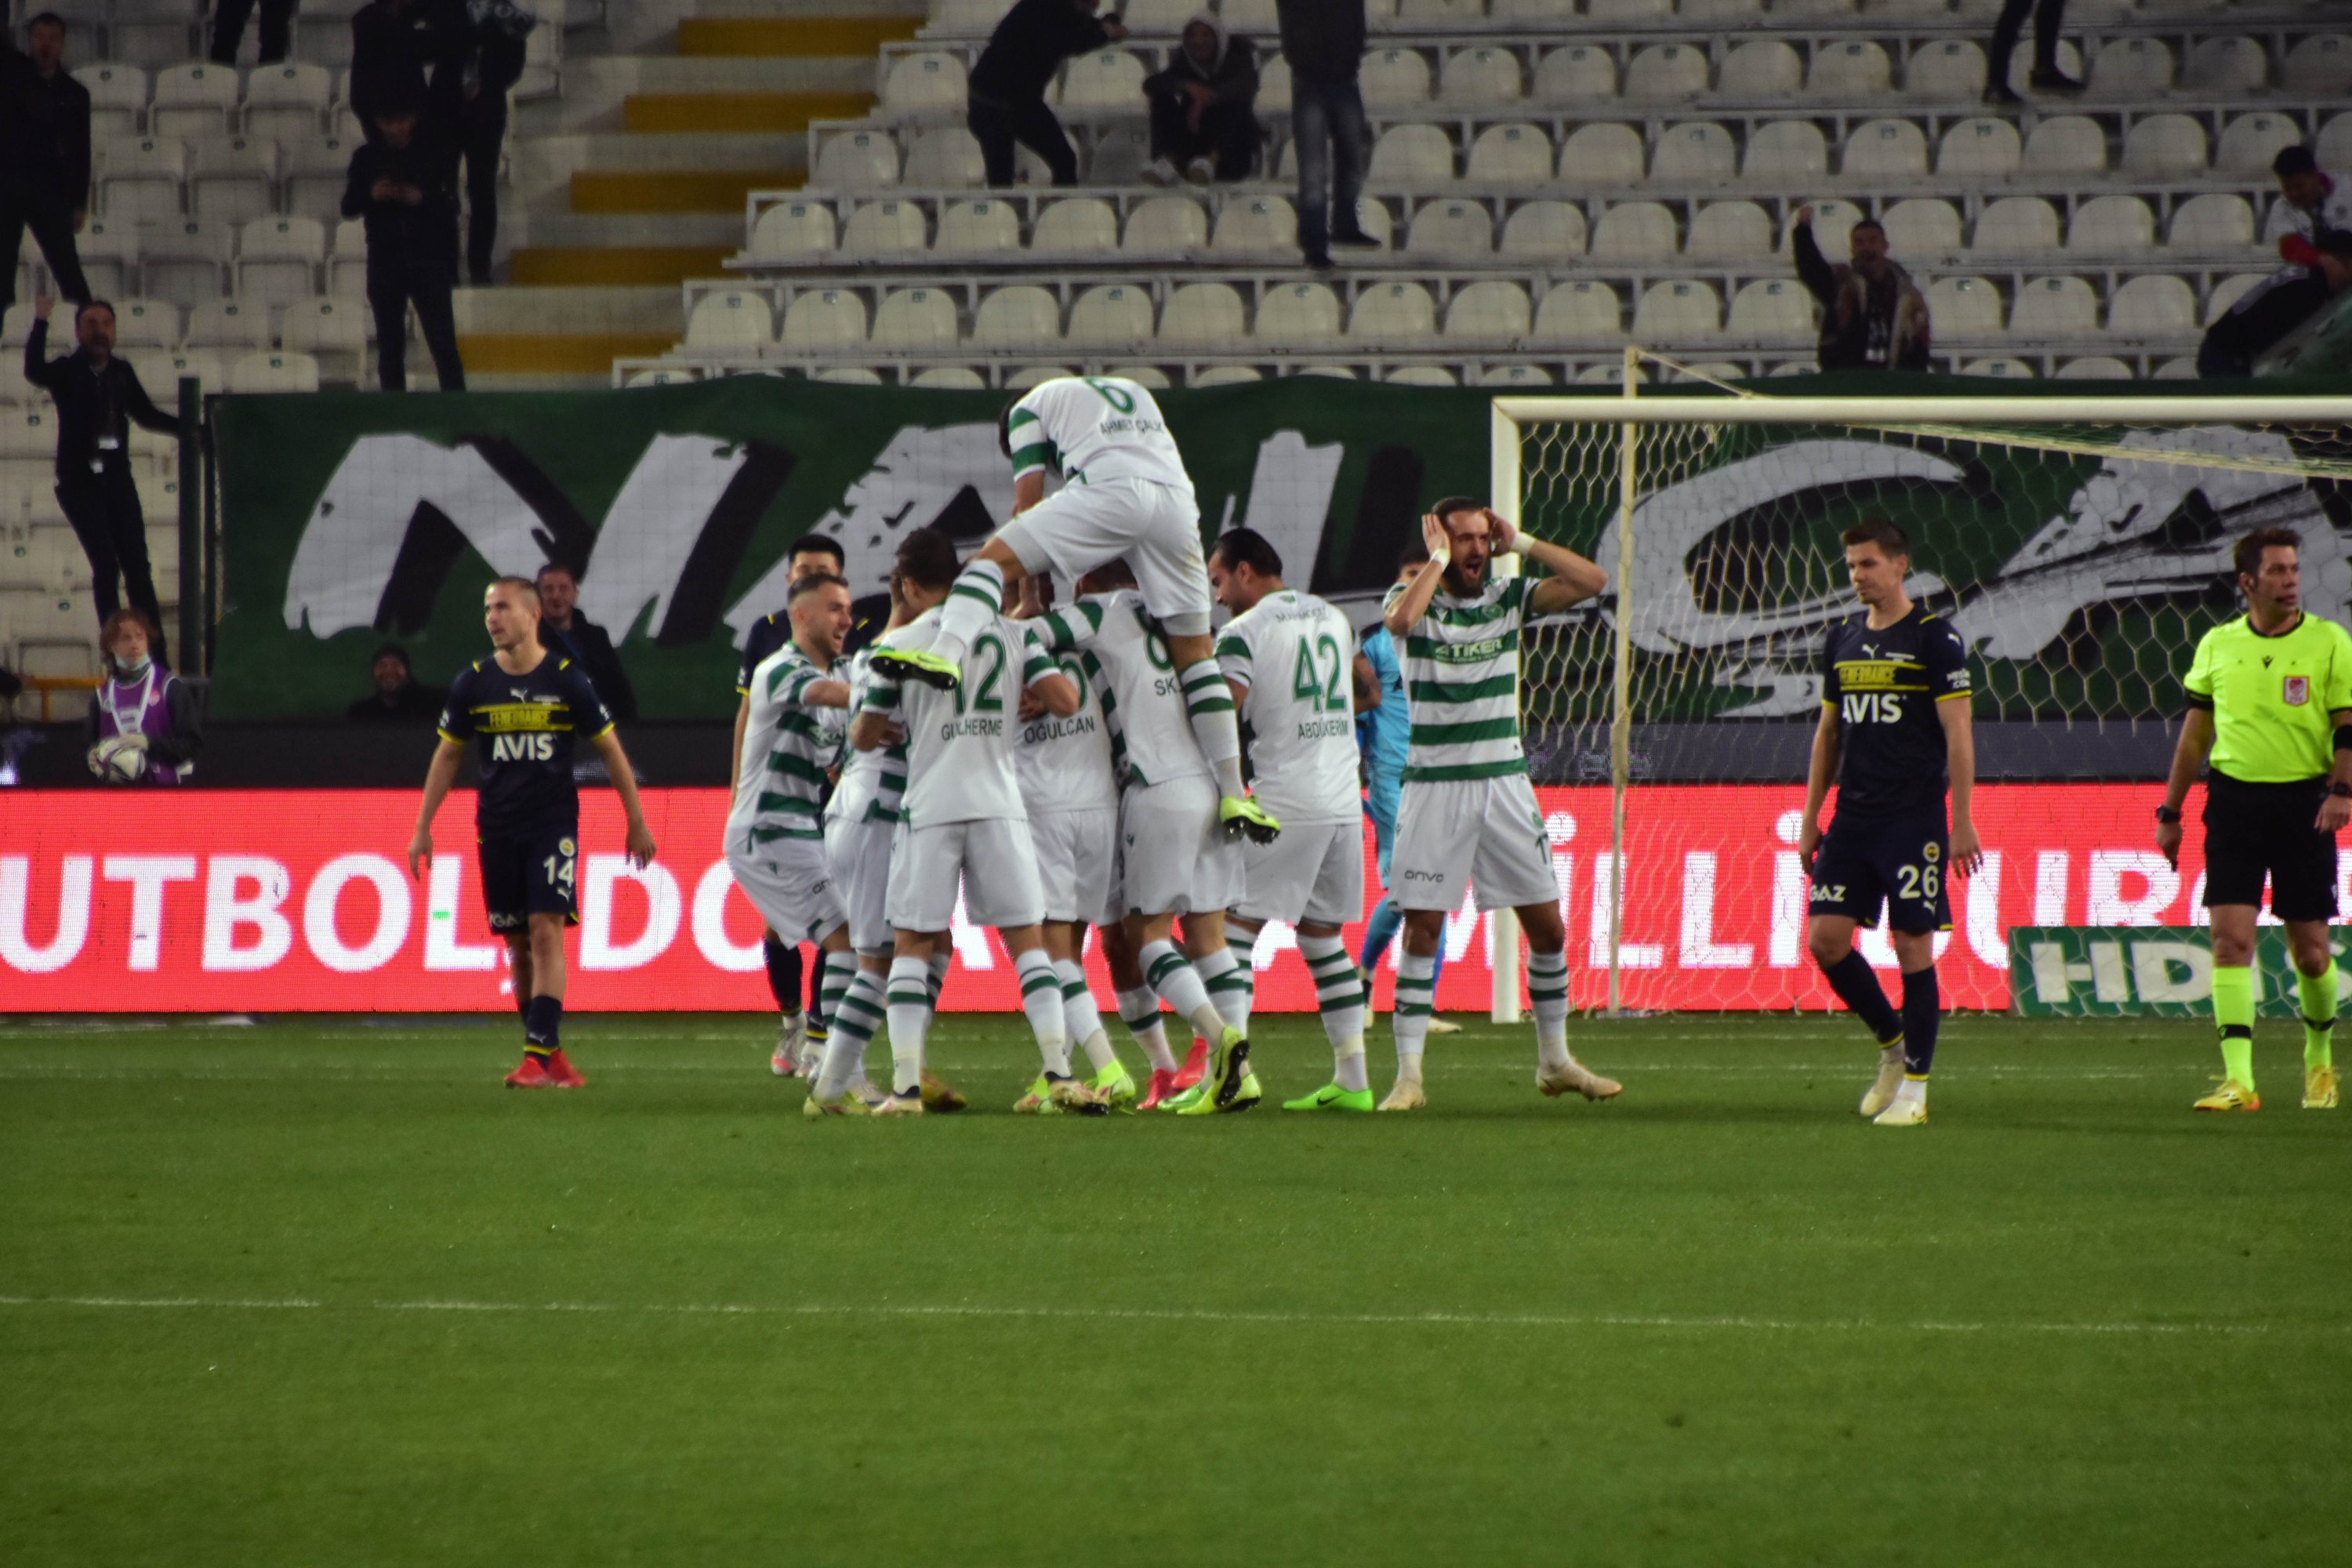 Konyaspor players celebrate a goal during a Süper Lig match against Fenerbahçe, in a Süper Lig match, Konya, Turkey, Oct. 30, 2021. (DHA Photo)